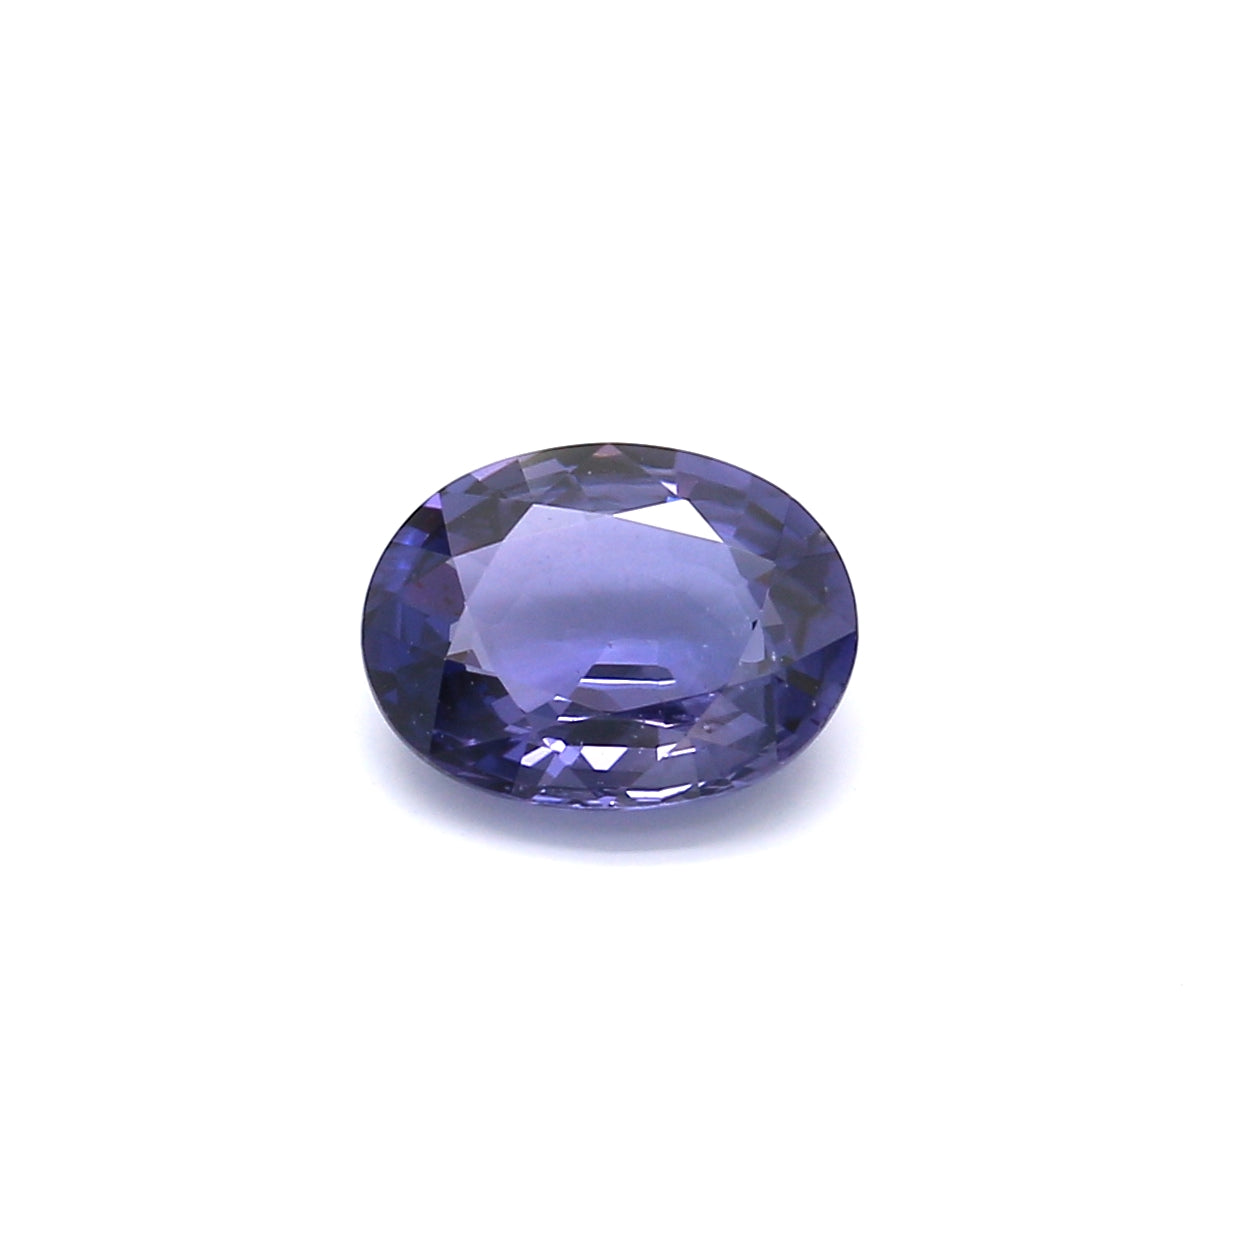 2.00ct Violetish Blue / Purple, Oval Color Change Sapphire, Heated, Sri Lanka - 8.74 x 6.69 x 3.59mm